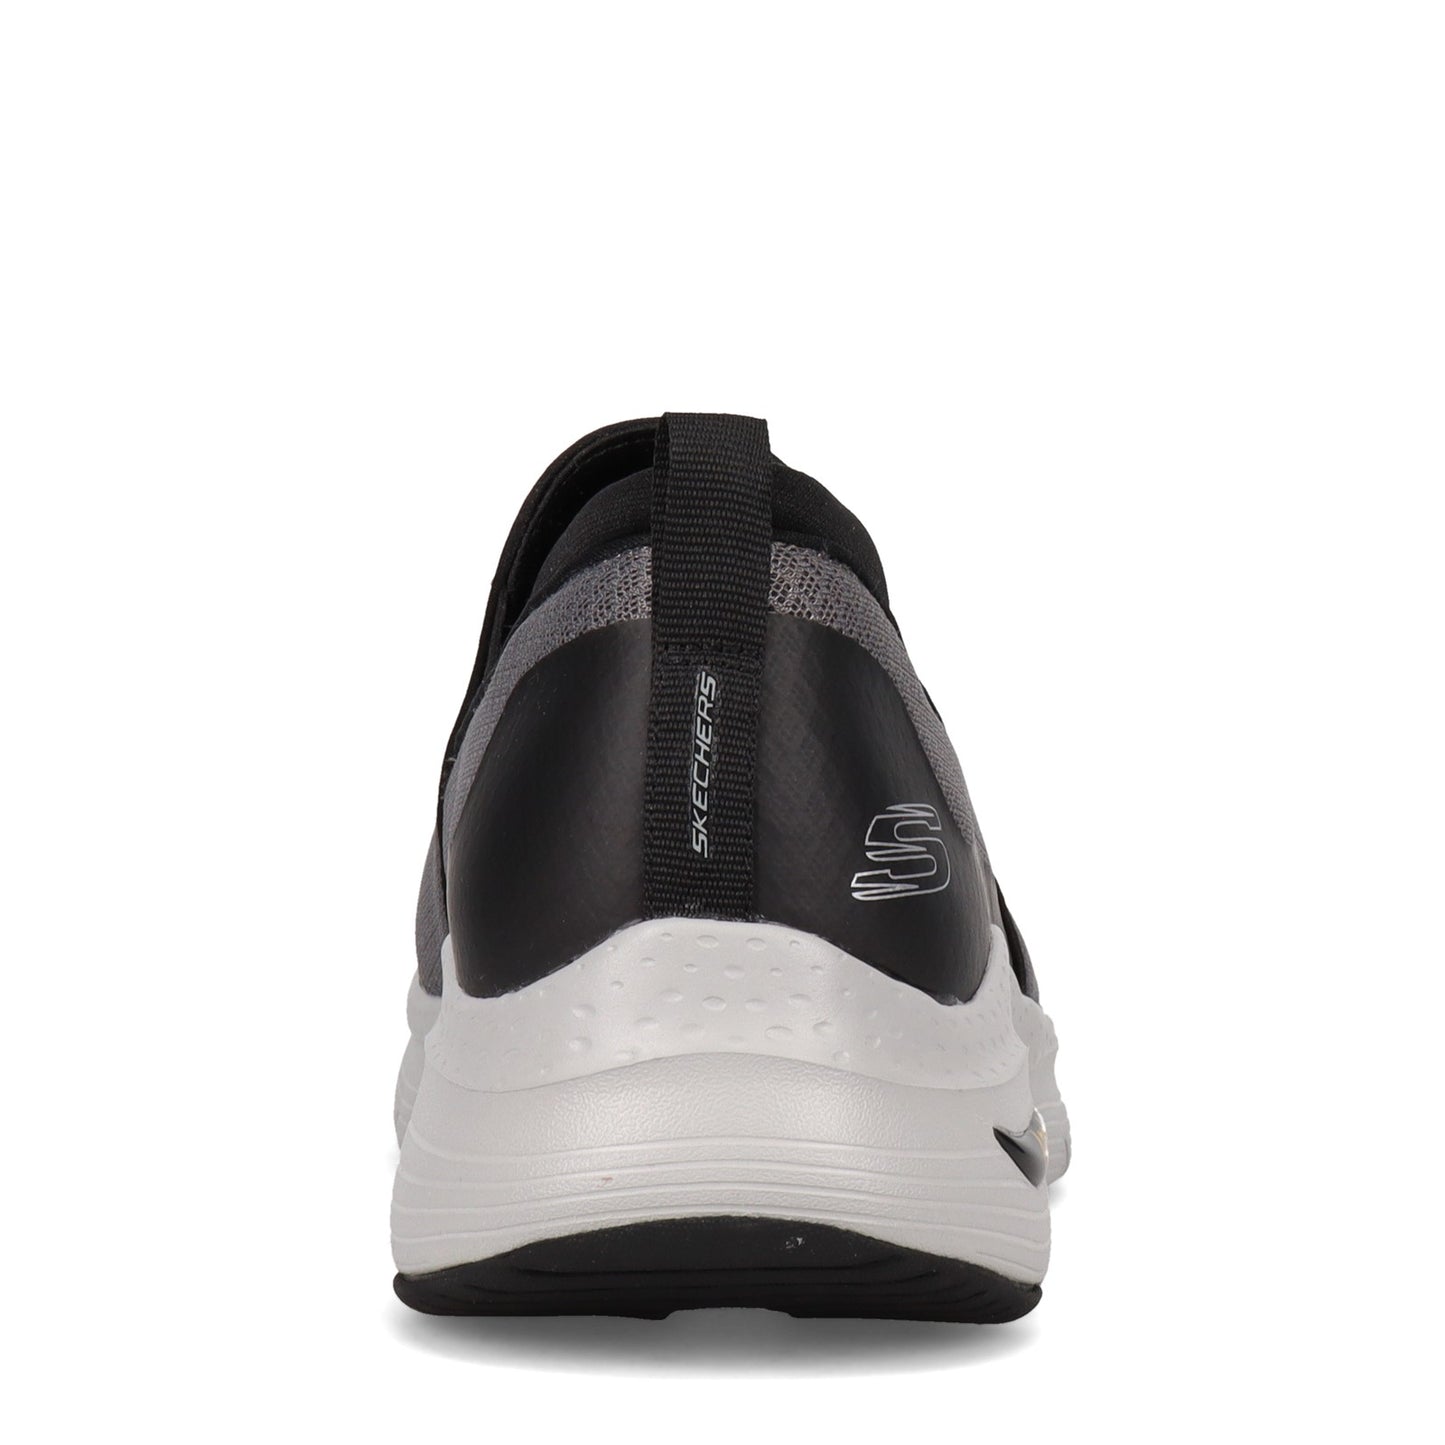 Peltz Shoes  Men's Skechers Arch Fit - Banlin Slip-On Sneaker CHARCOAL 232043-CCBK